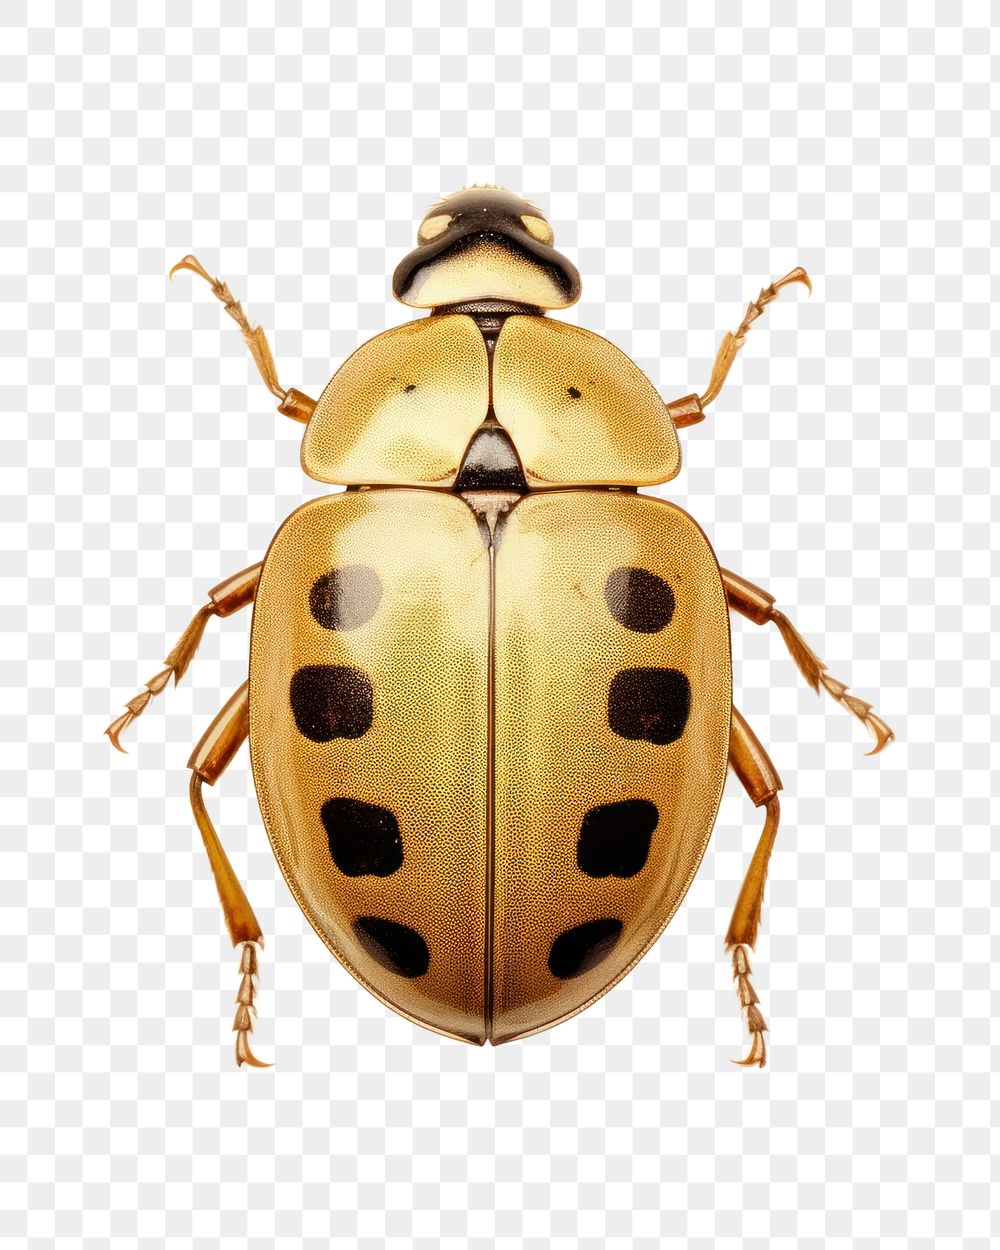 PNG Real Pressed golden ladybug animal insect invertebrate.